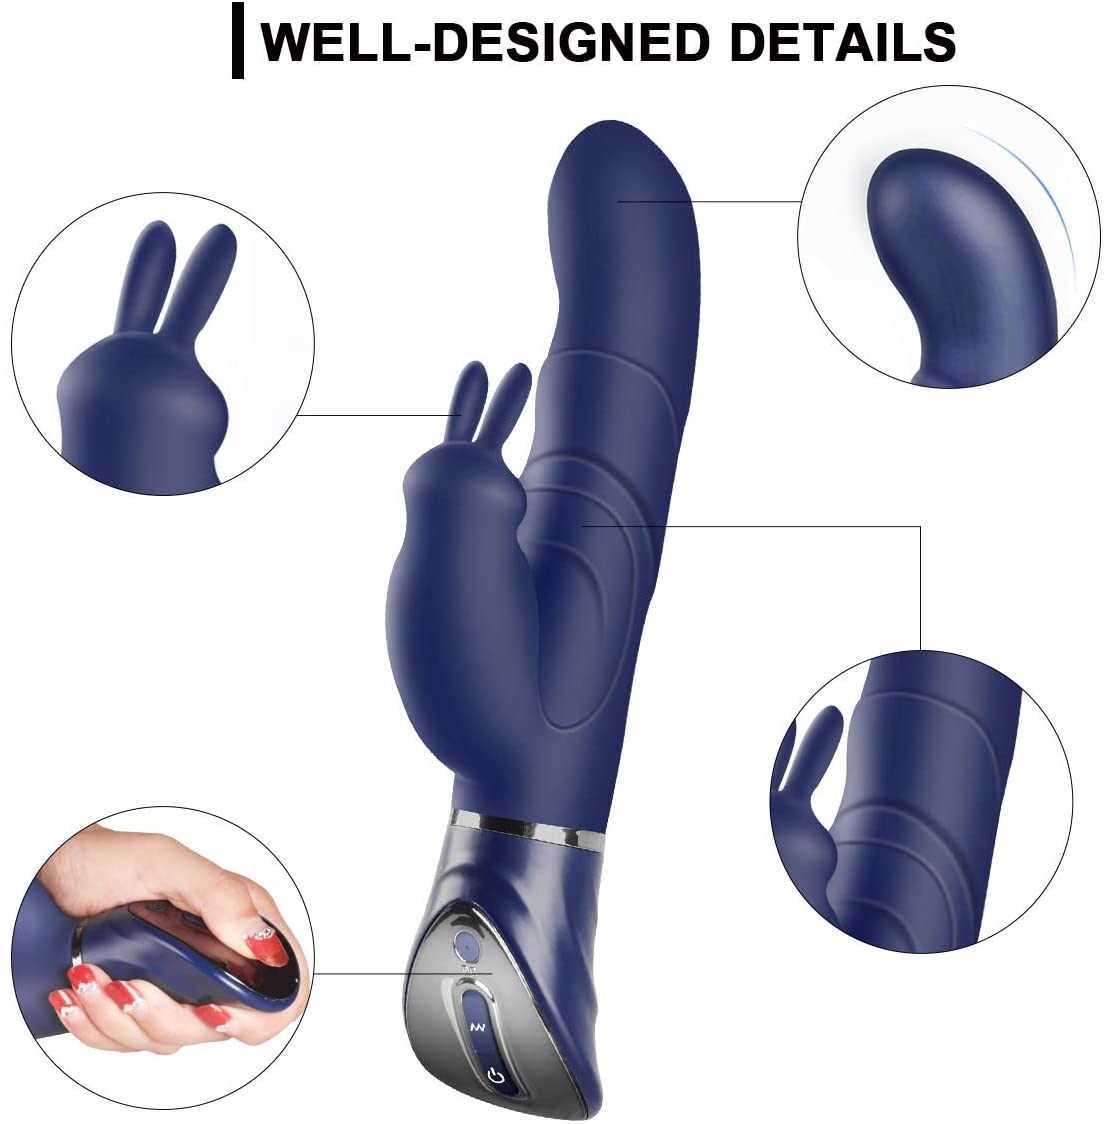 Easy Holding Rabbit Vibrator 10*10 Modes G-spot Clitoris Stimulation